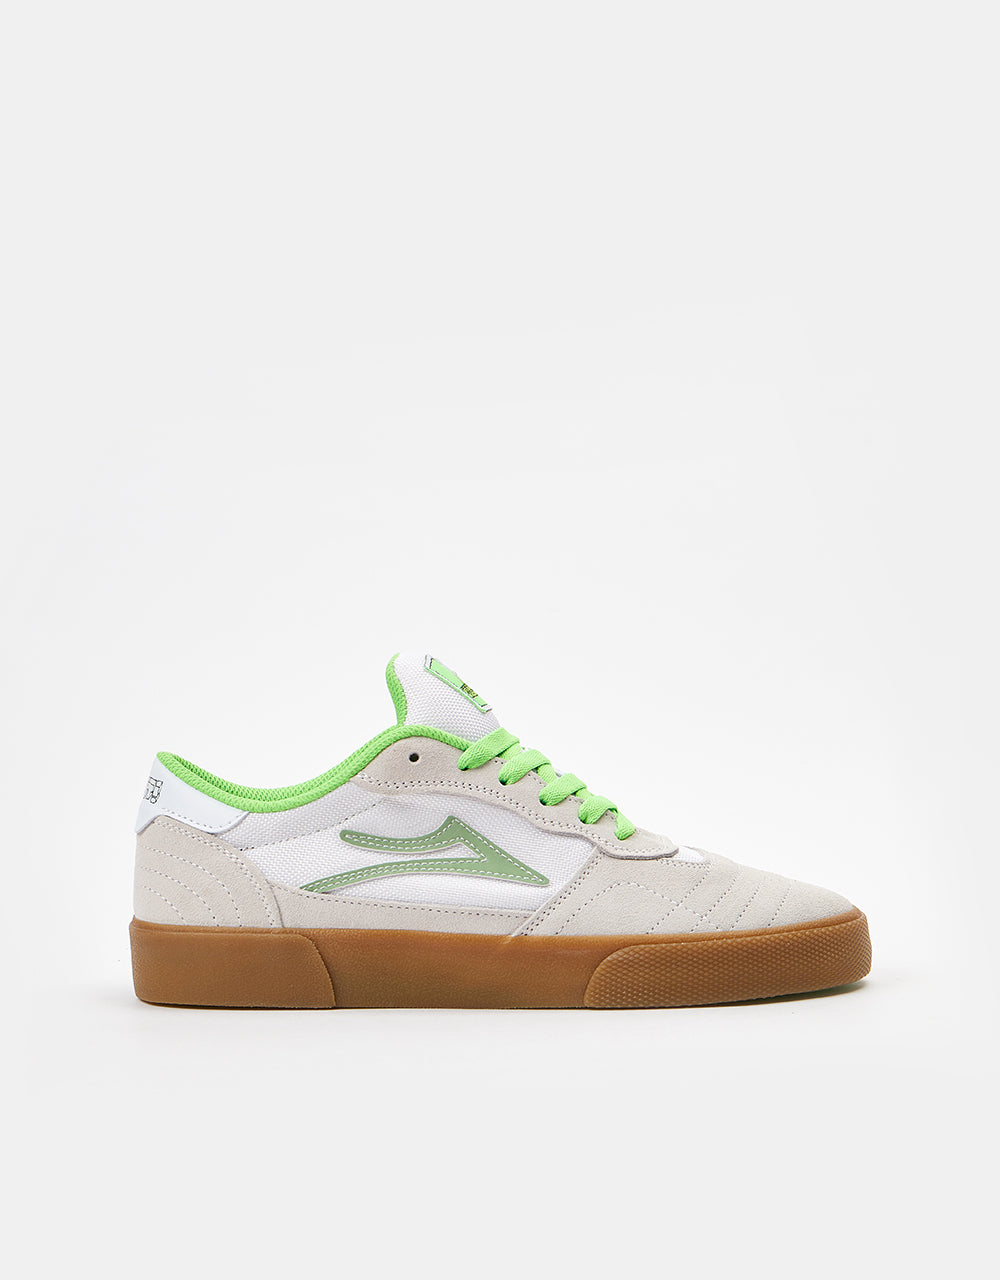 Lakai x Girl Yeah Right! Cambridge Skate Shoes - White/UV Green Suede